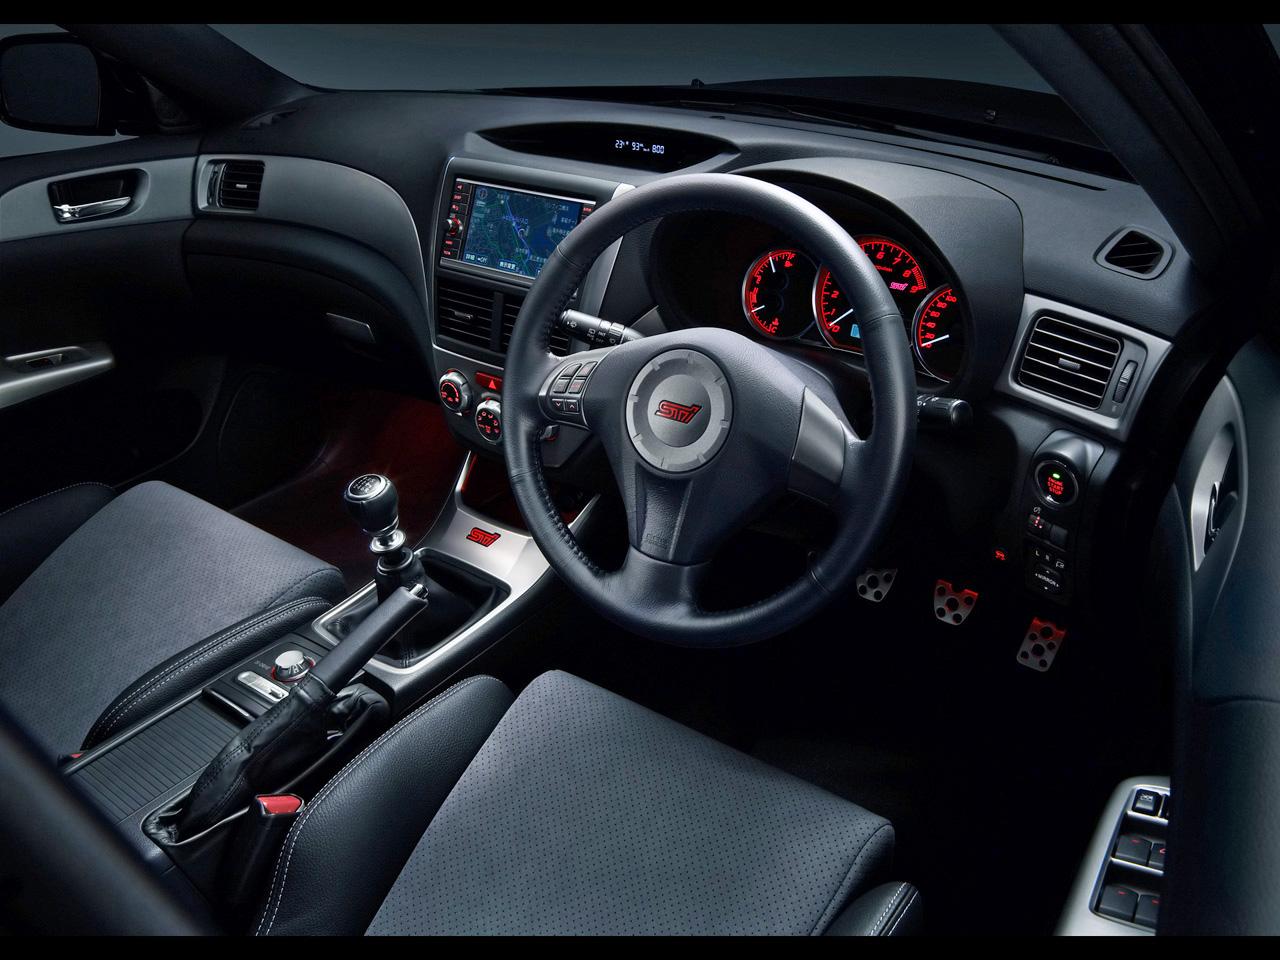 2008-Subaru-Impreza-WRX-STI-Interior-1280x960.jpg